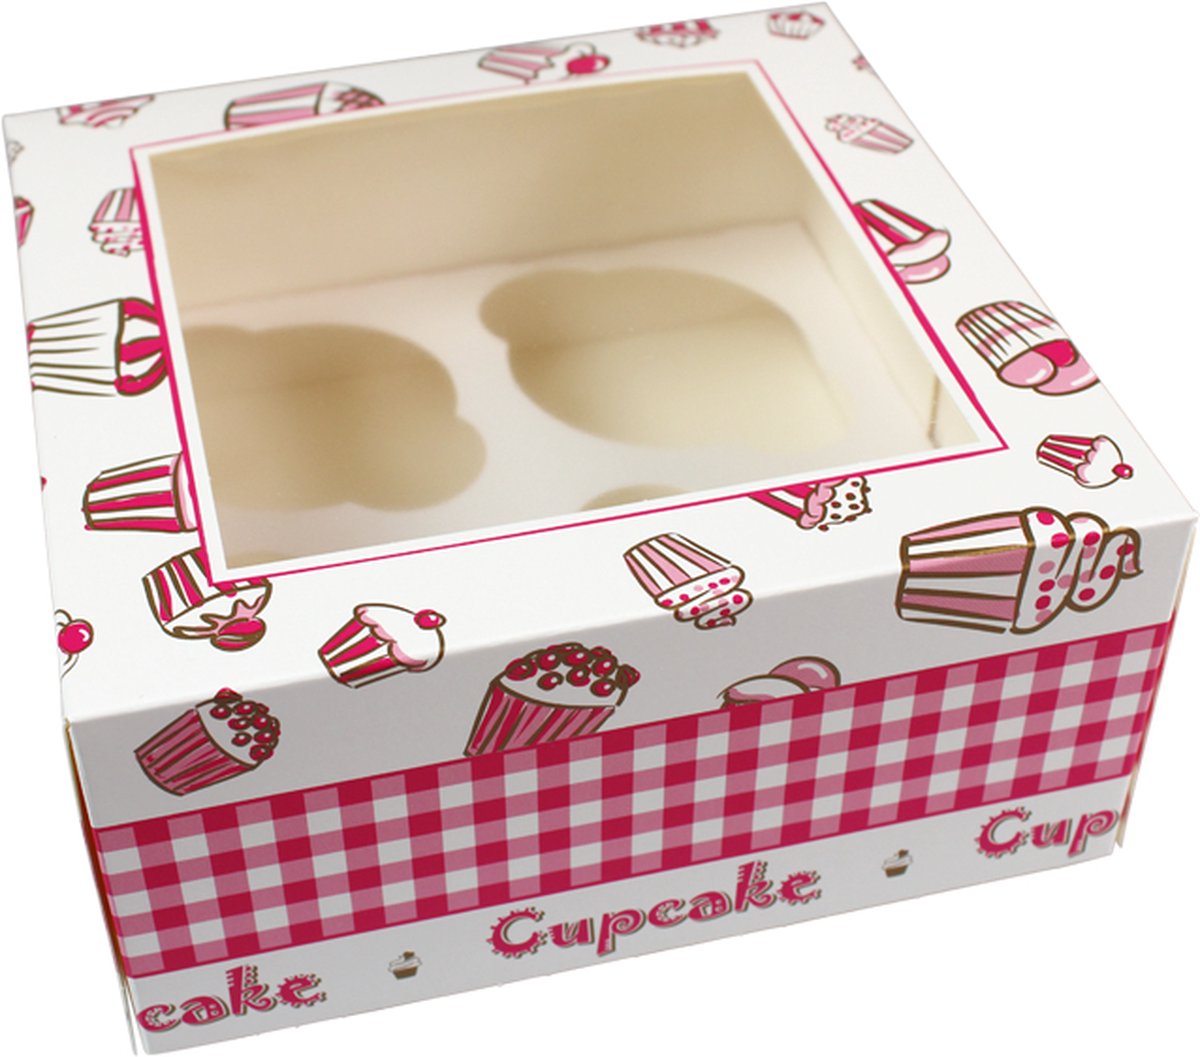 Cupcake vensterdoos - karton/PLA - 170x170x80mm - wit/Roze - 100 stuks